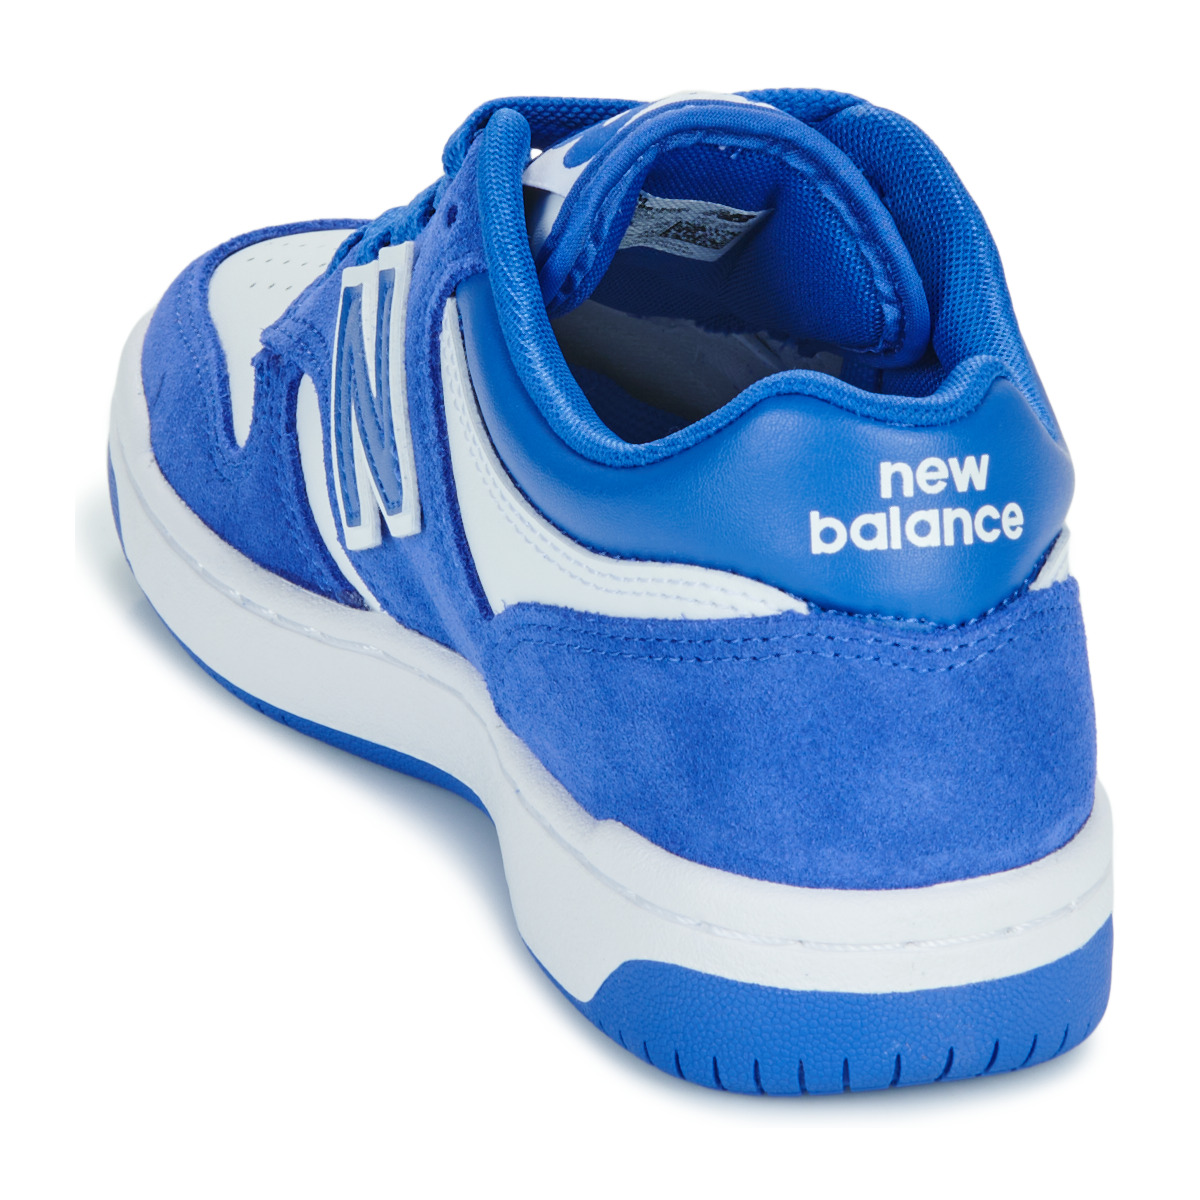 New Balance Bleu / Blanc 480 kX5JyN3R